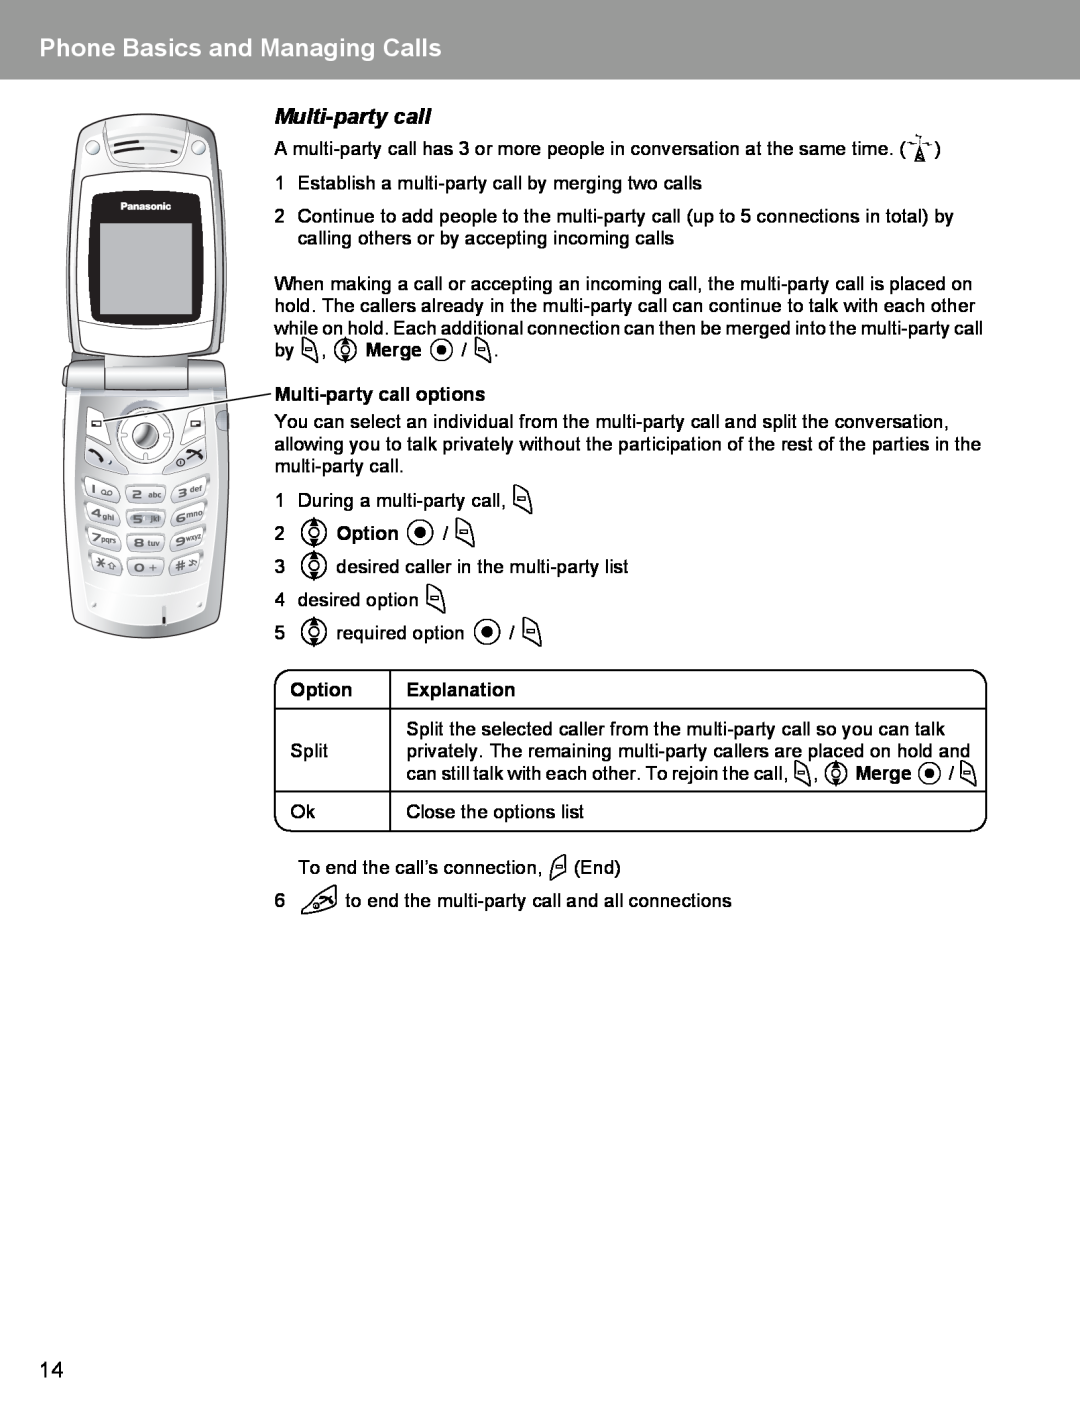 Panasonic EB-X400 Multi-party call options, 2 4Option / A, Phone Basics and Managing Calls, Explanation 